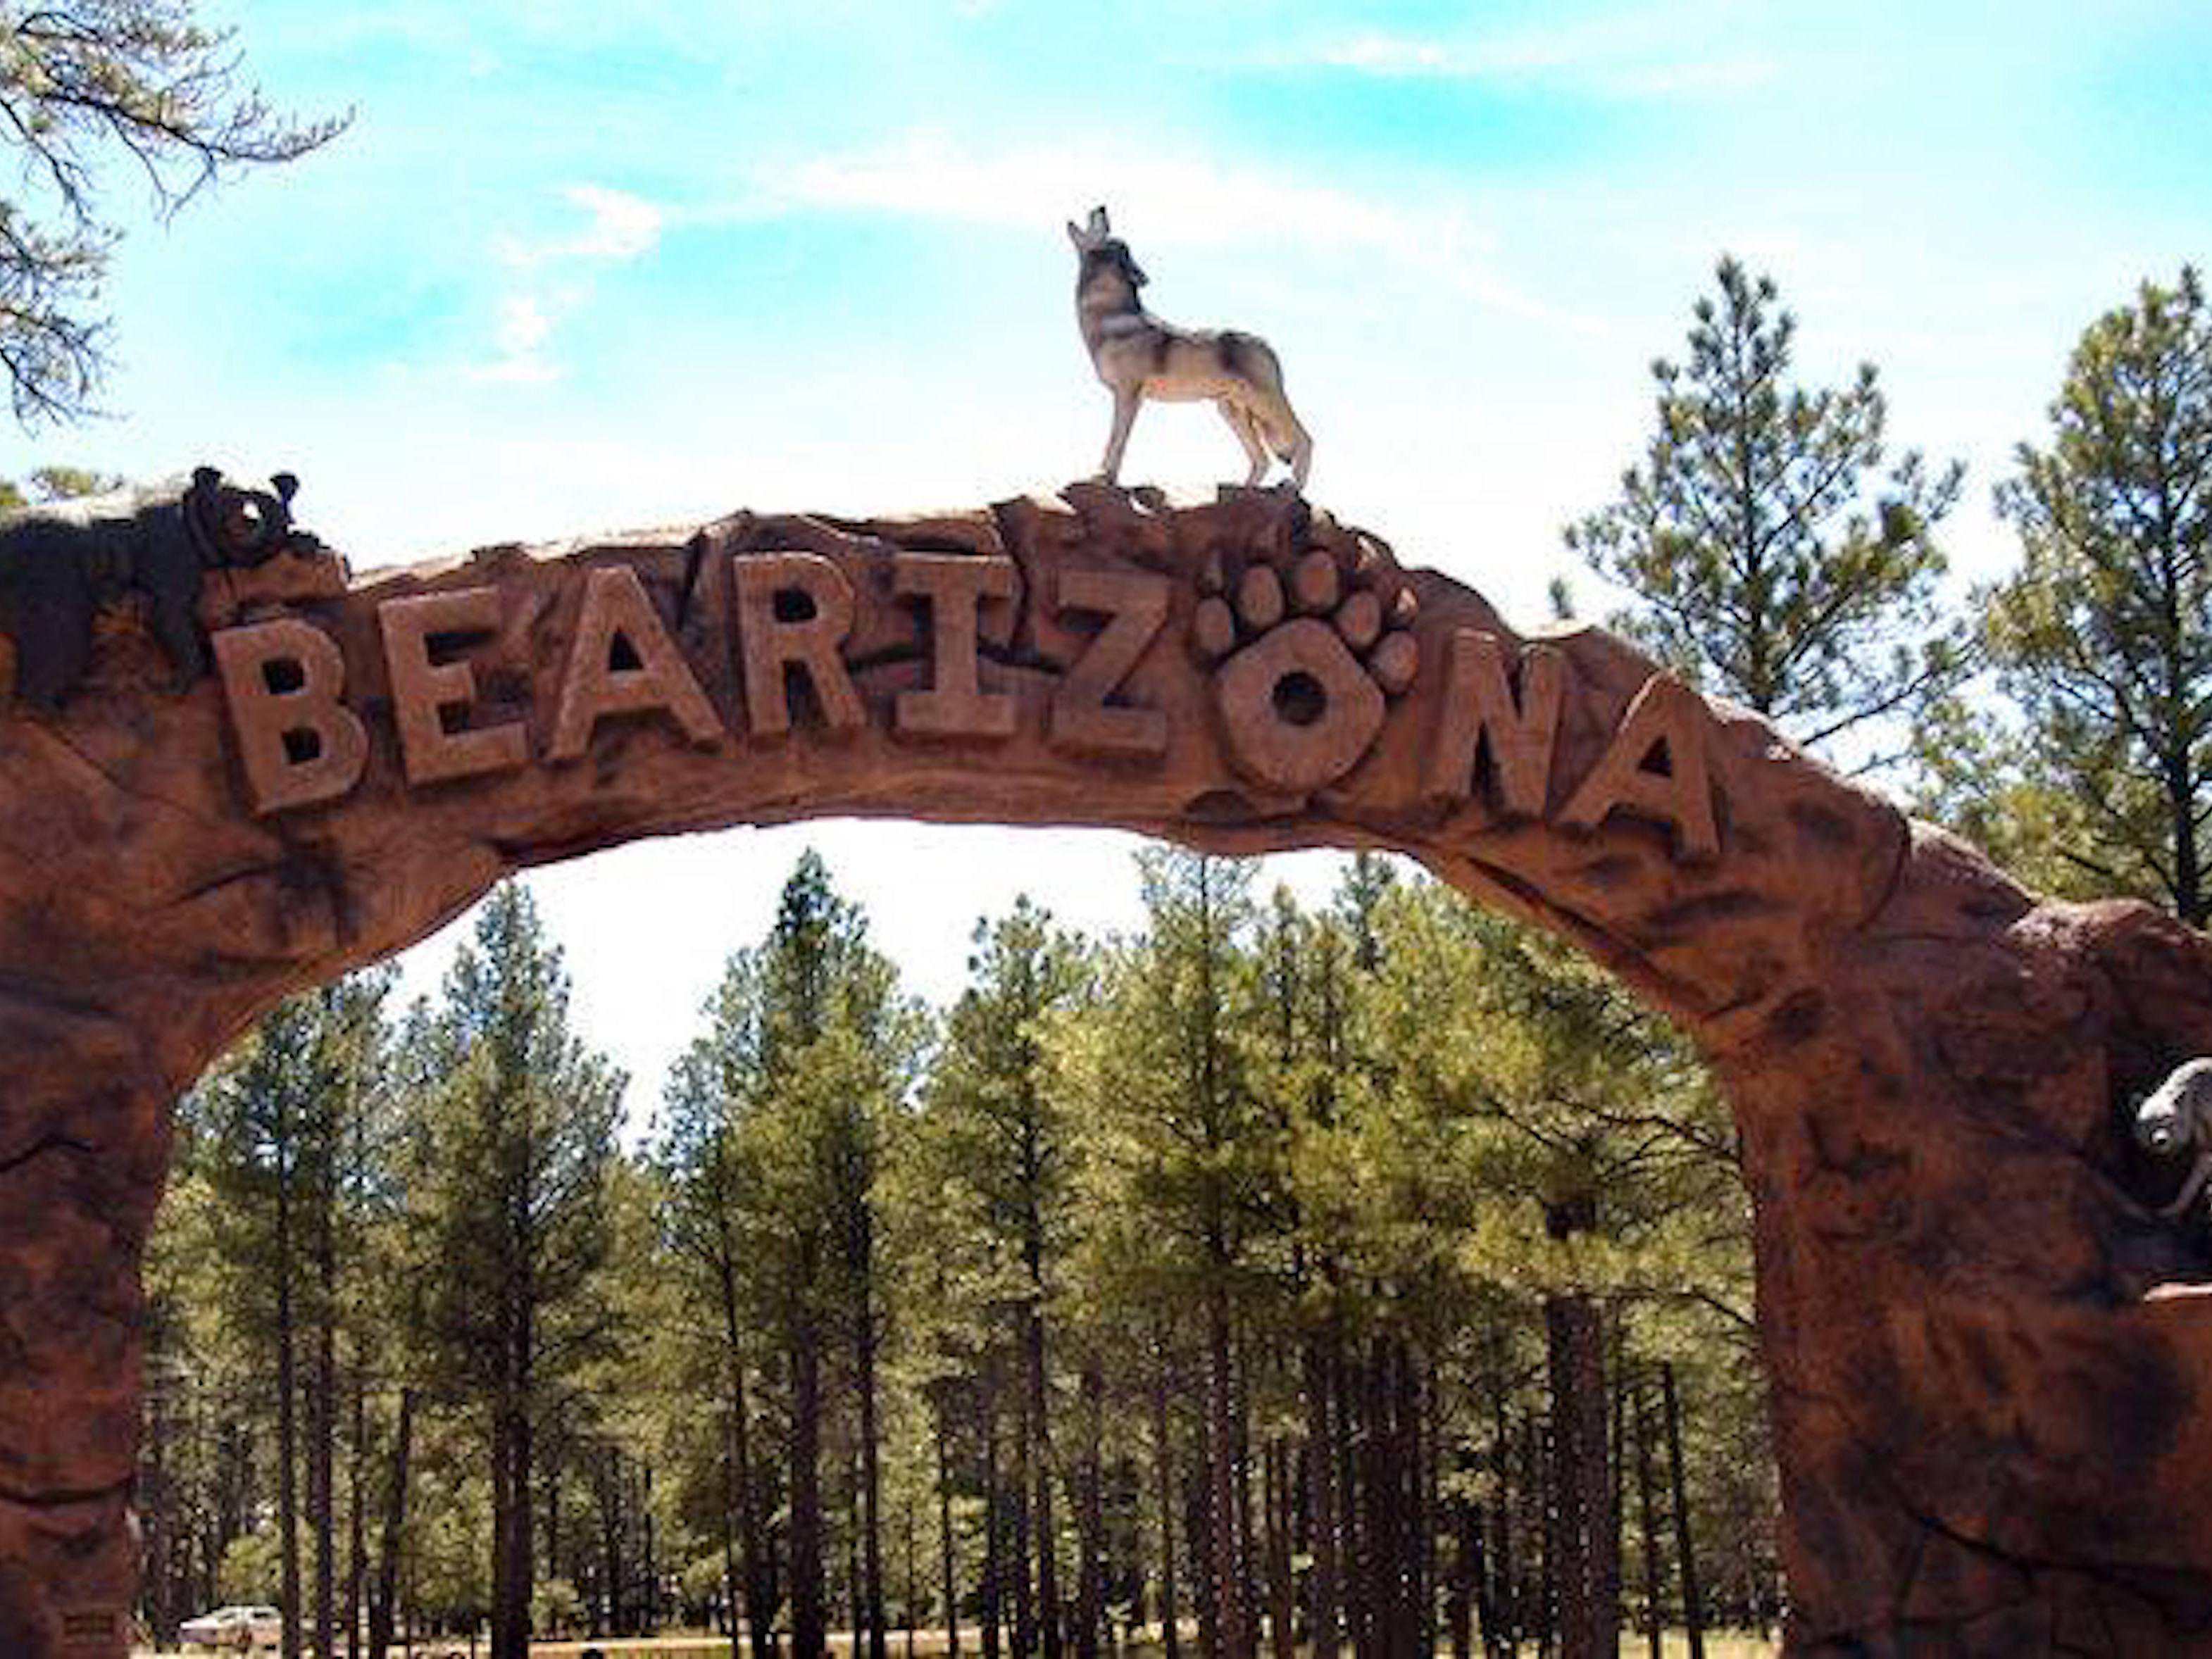 Bearizona is a North American wildlife park